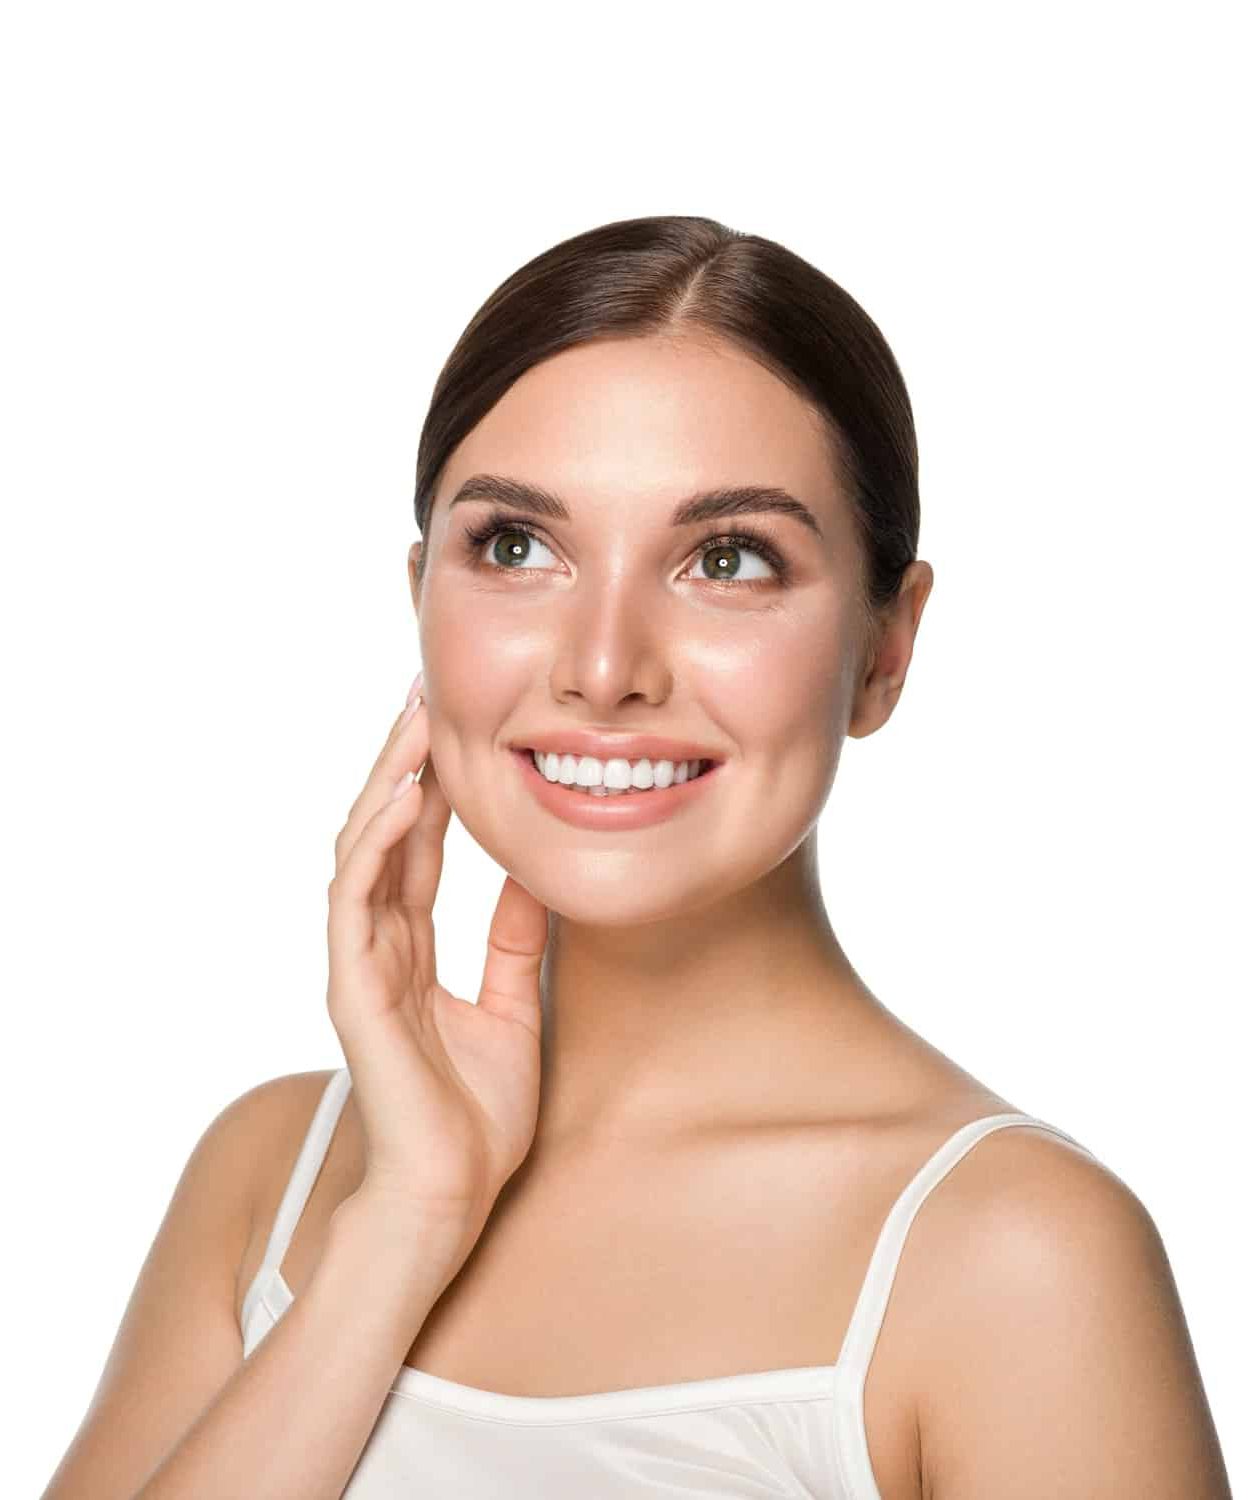 Healthy teeth smile woman beauty skin cosmetic spa portrait